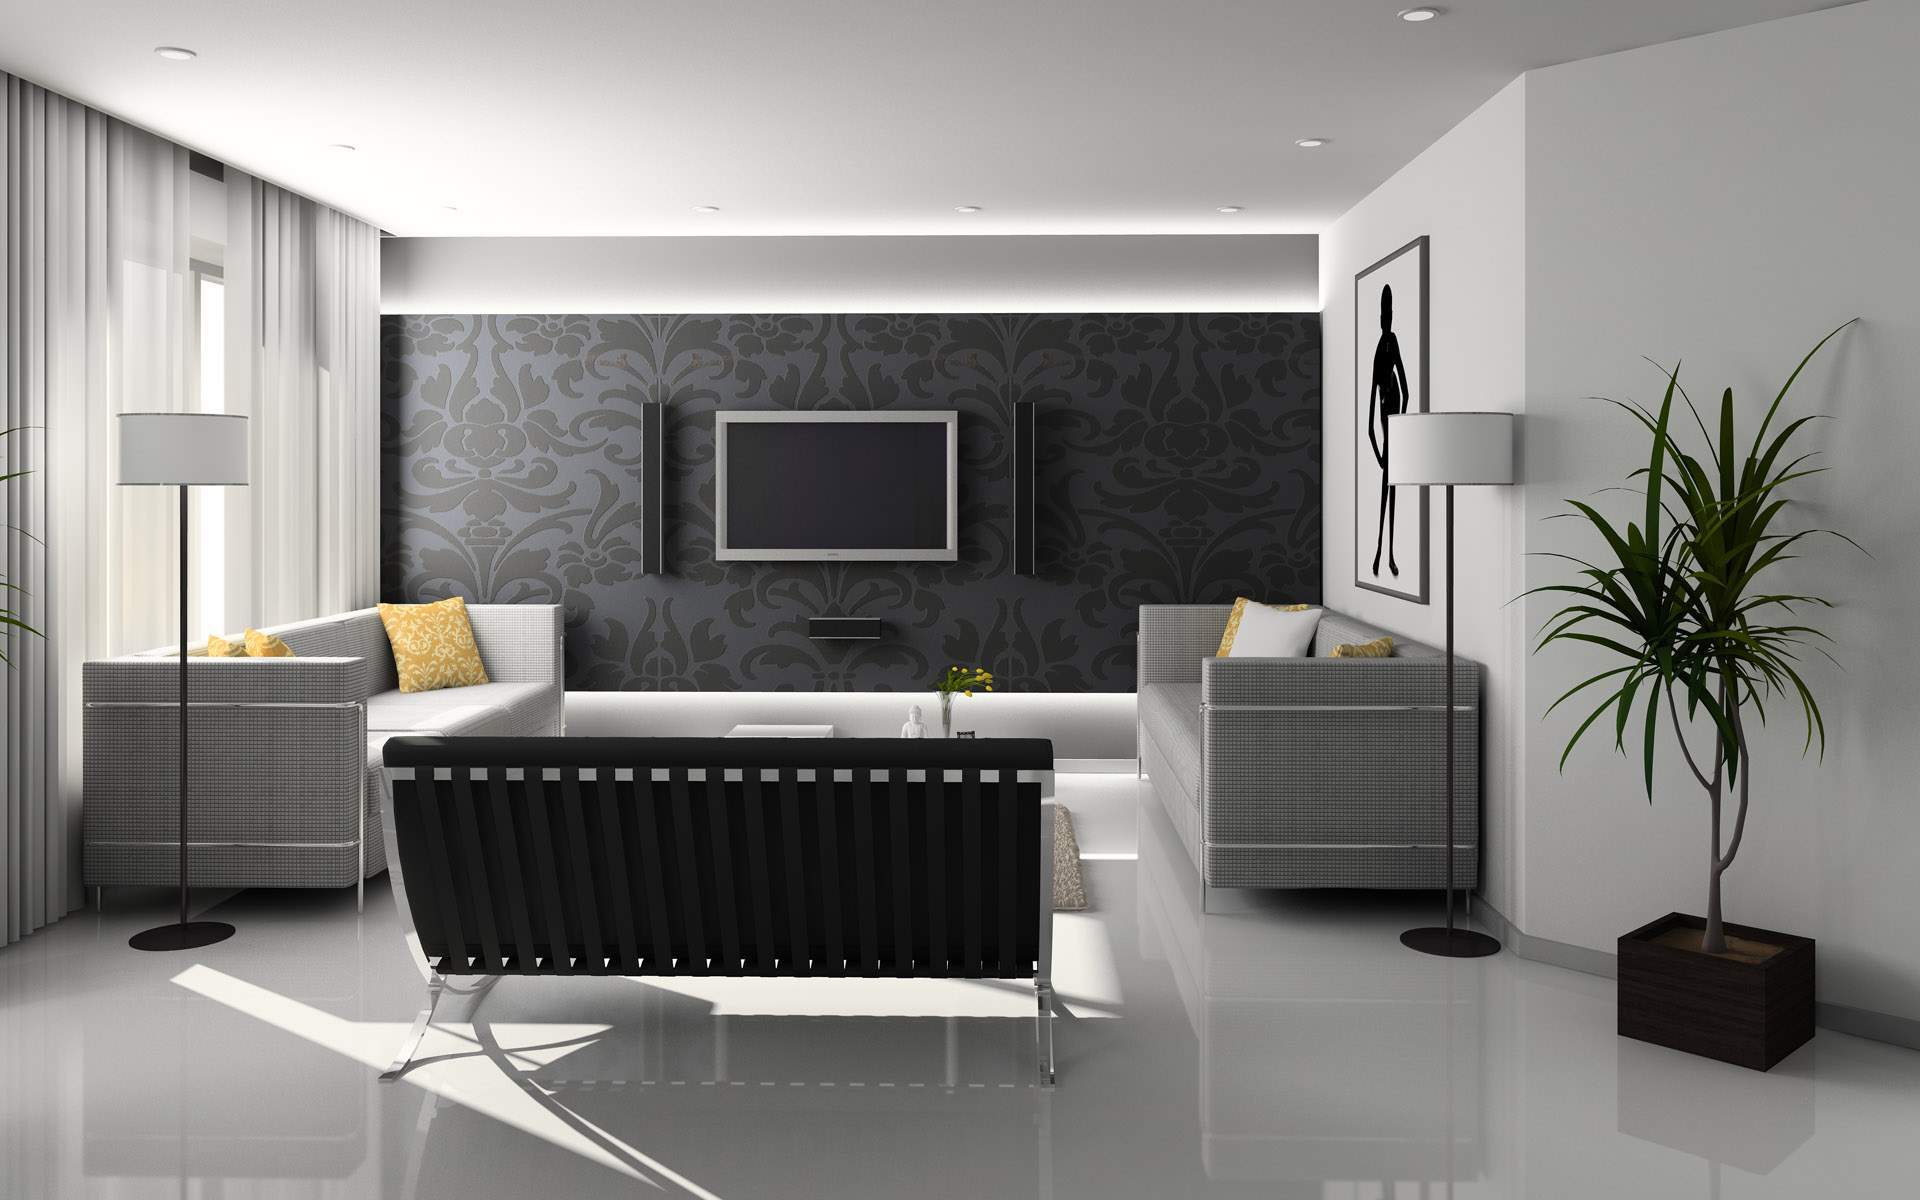 Living Room Home Design Interior Ideas With Image Stylish Jpg